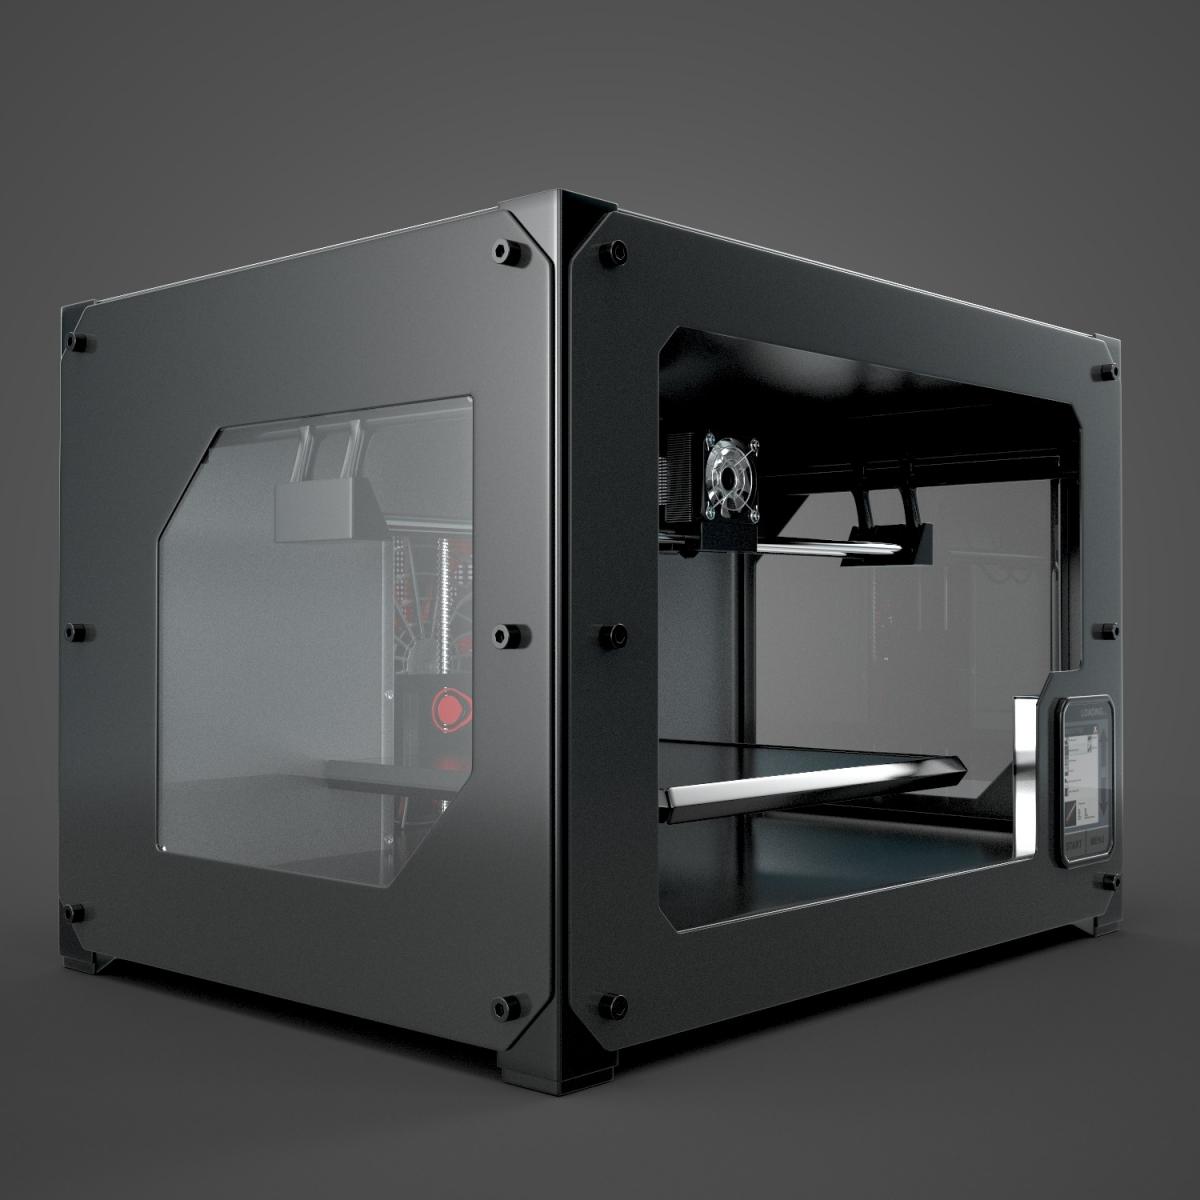 3D Printer model - 00029 3D Printer MoDel 2 01 Preview02.jpga476afe6 Fcf4 41a0 B7b0 Cfc0b8074310Original[1]